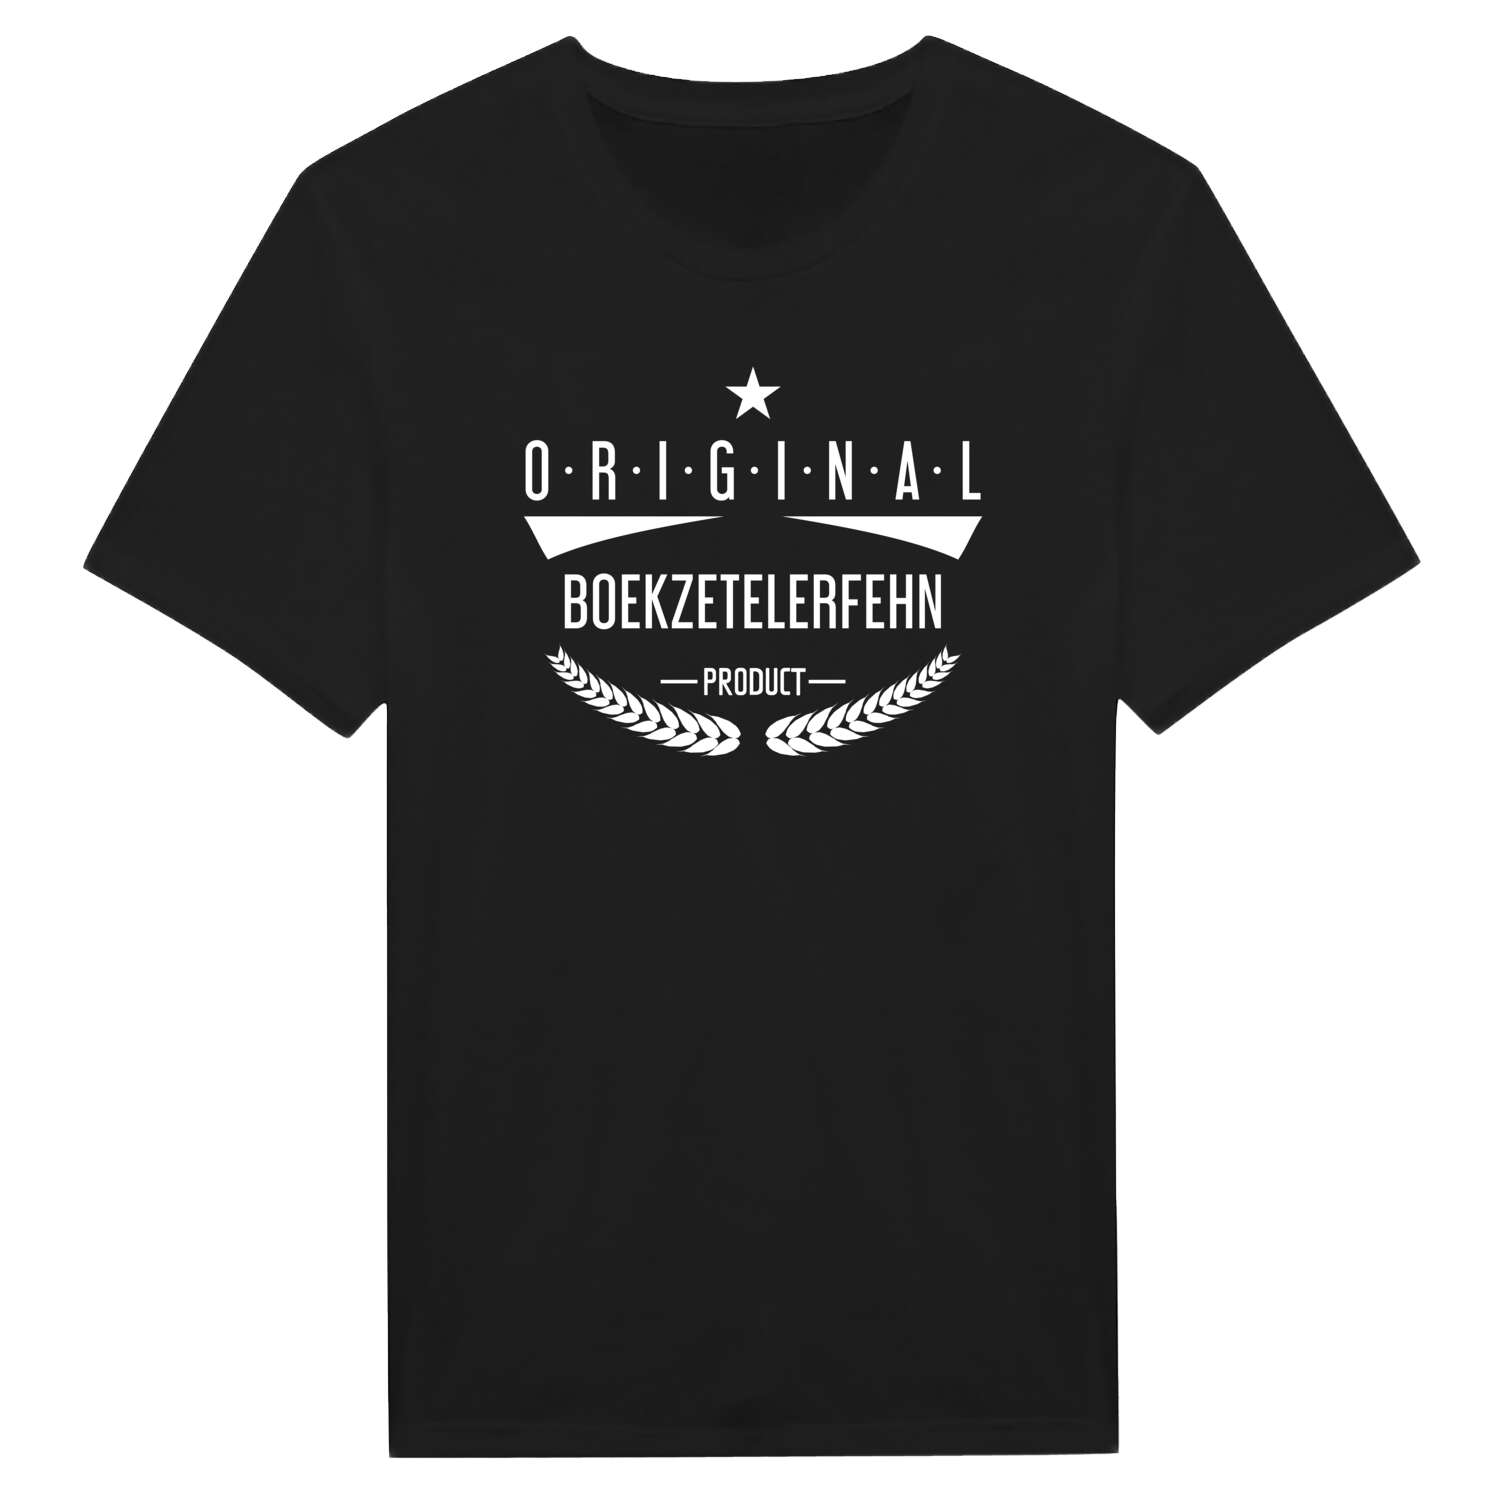 Boekzetelerfehn T-Shirt »Original Product«